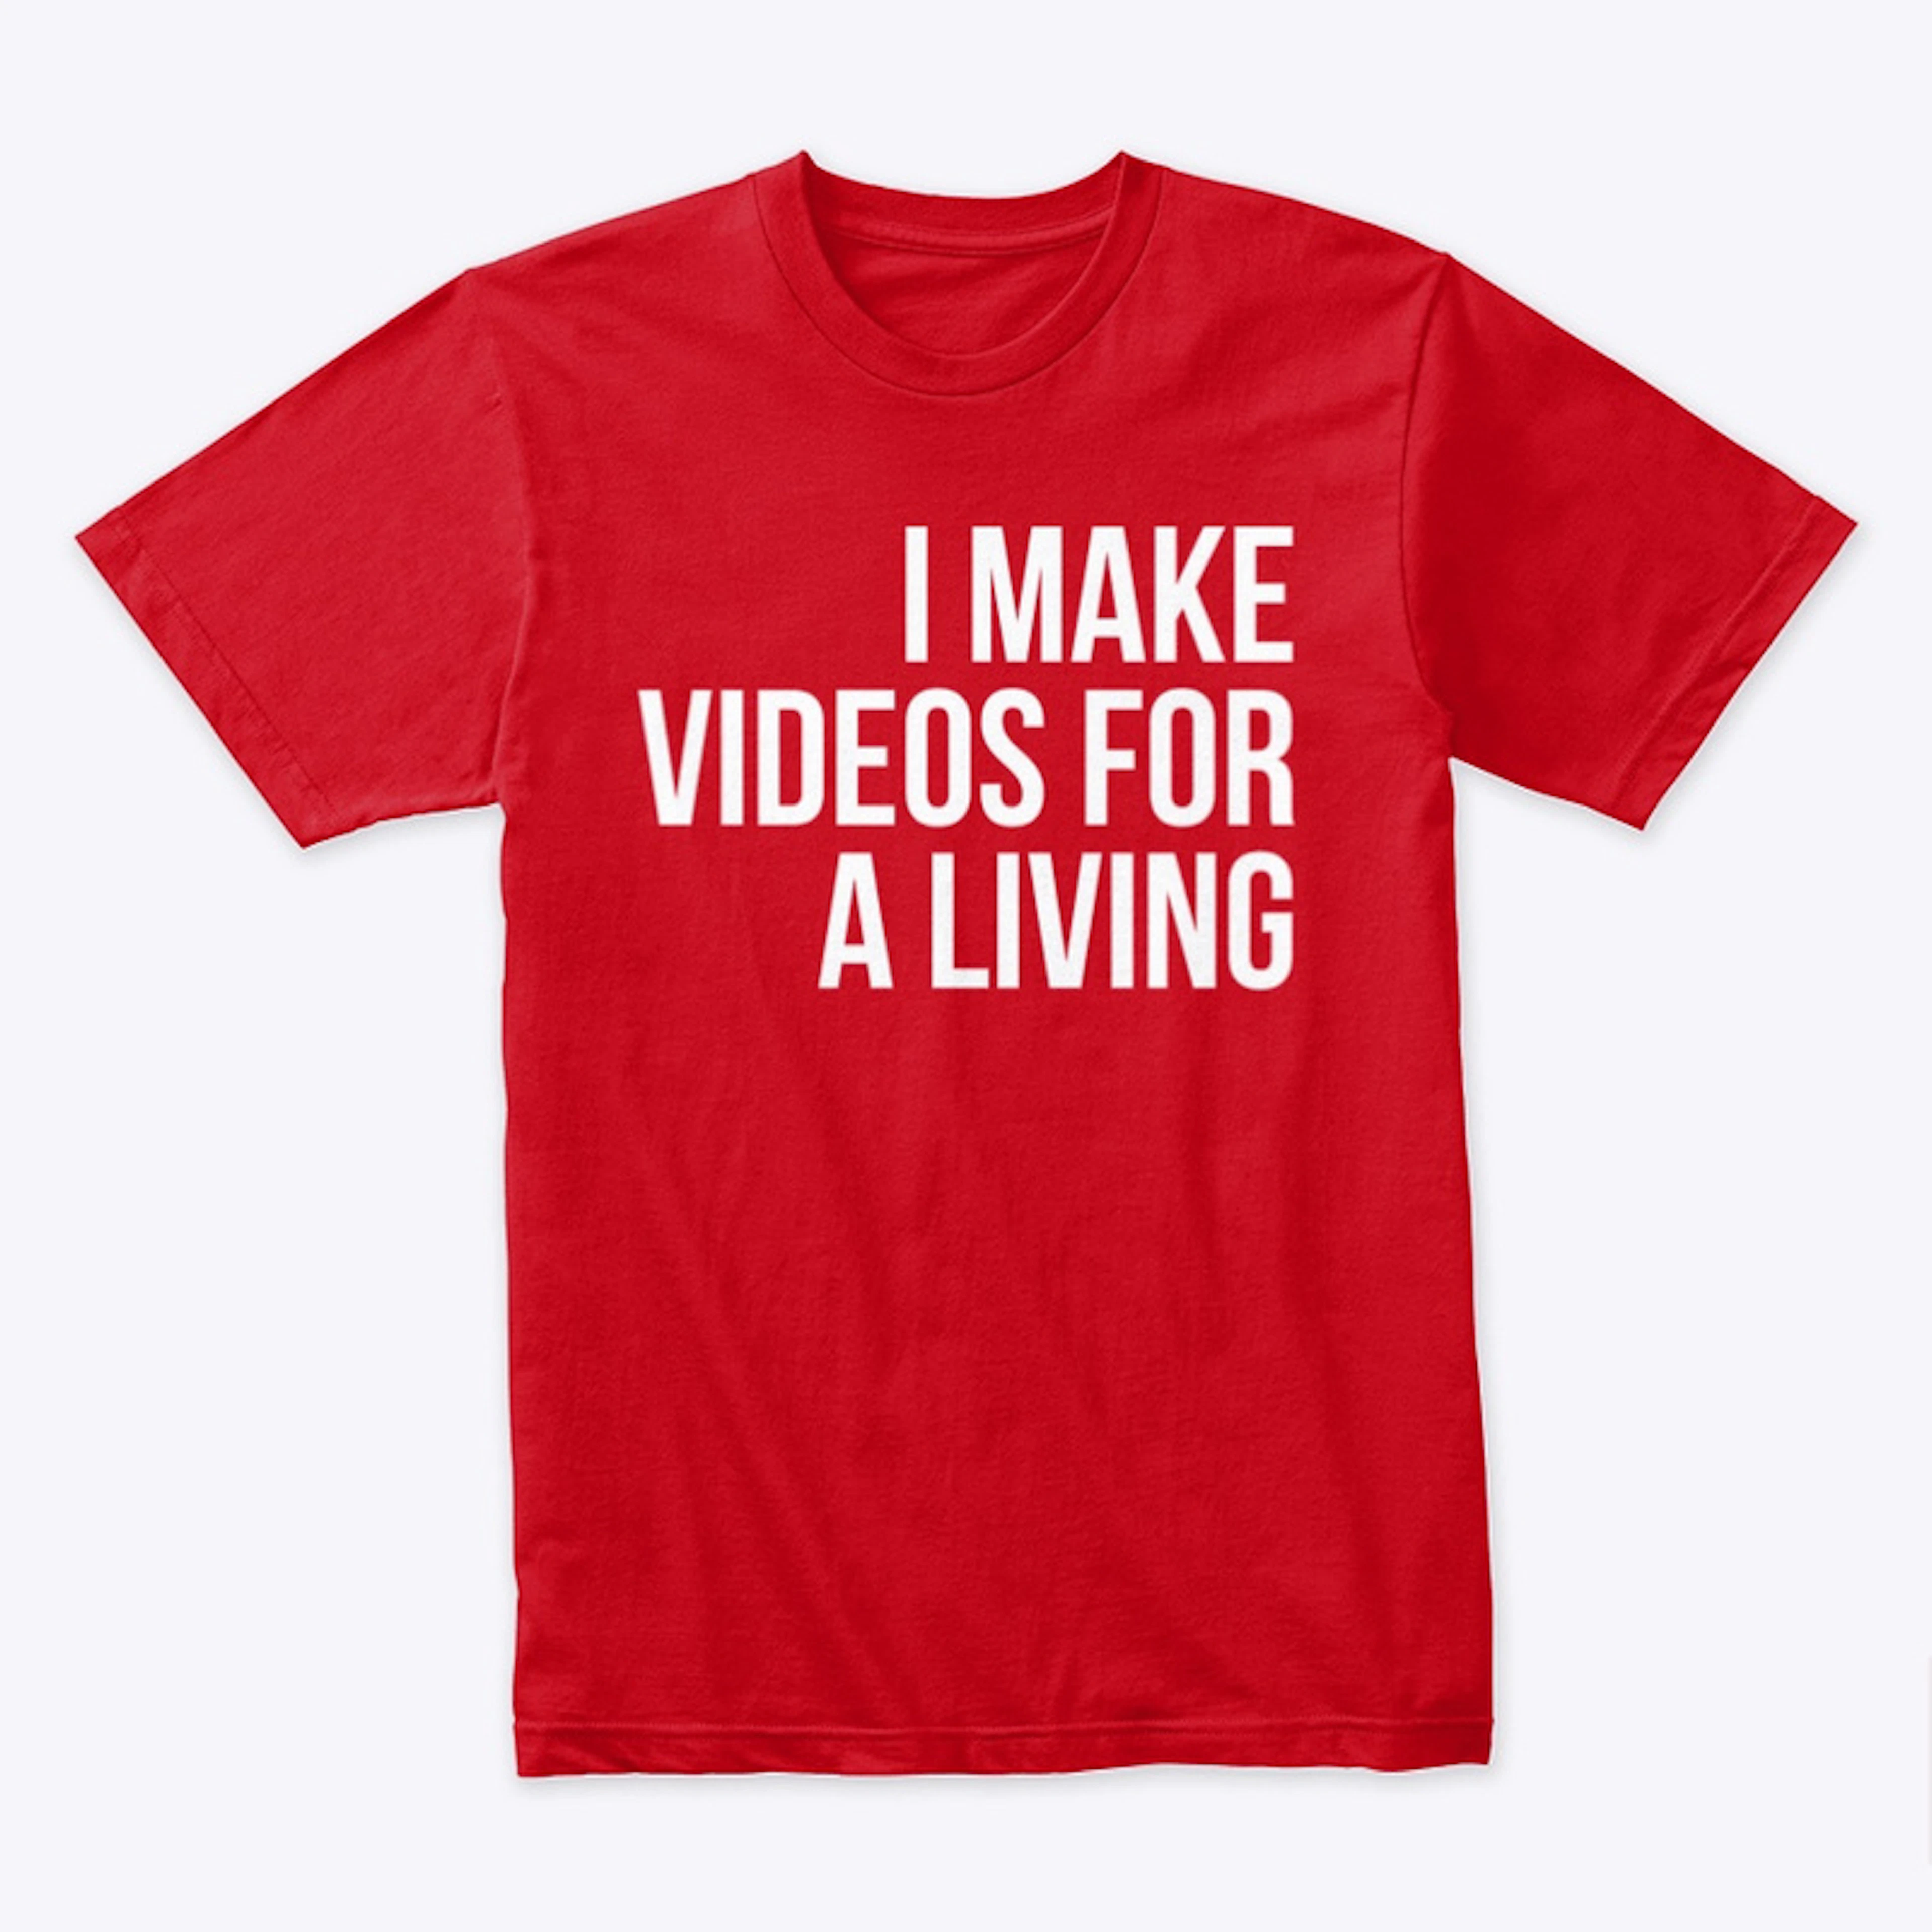 I MAKE VIDEOS FOR A LIVING